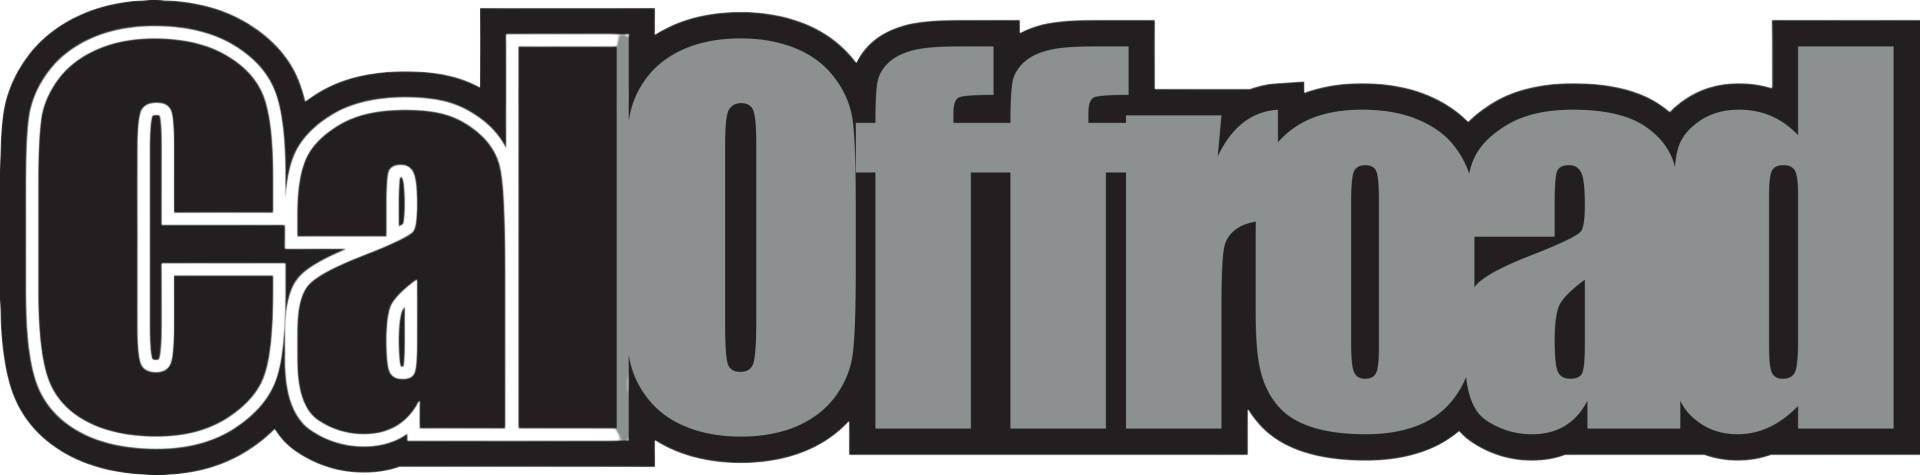 Caloffroad Logo